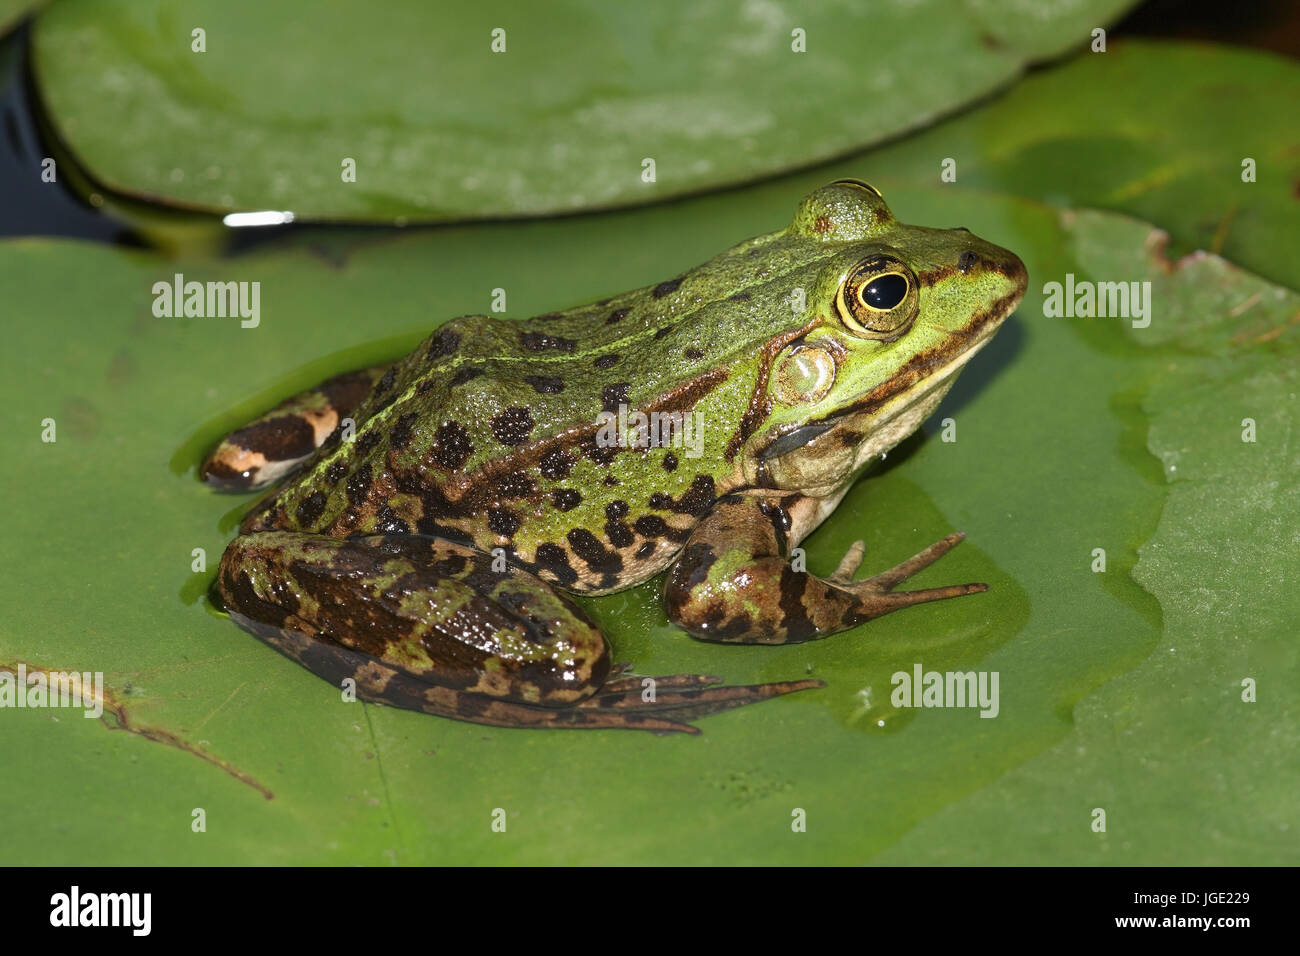 Pond frog si siede sul giglio di acqua foglio, Teichfrosch sitzt auf Seerosenblatt Foto Stock